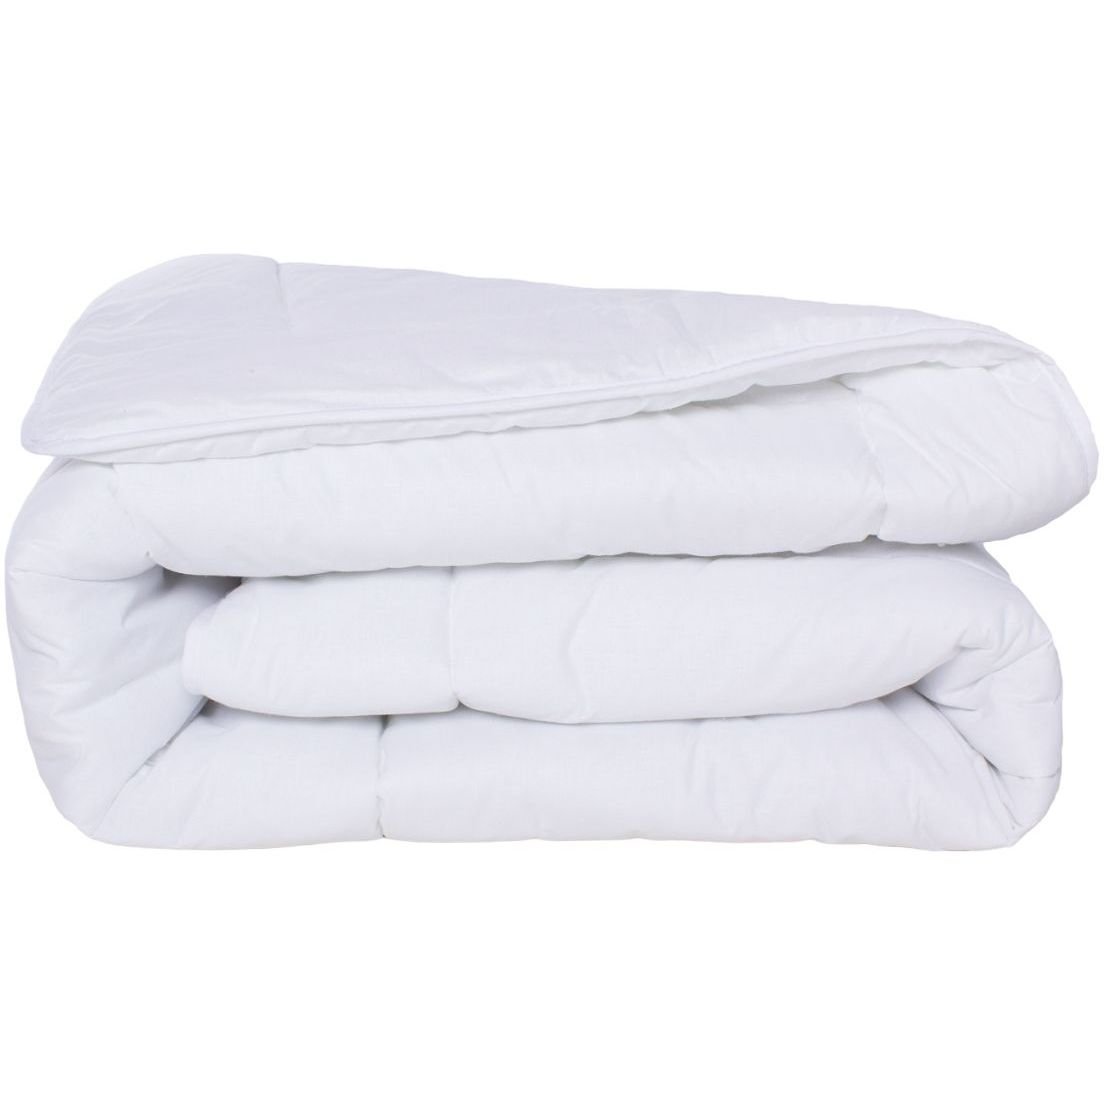 Одеяло шерстяное MirSon Bianco Экстра Премиум №0787, зимнее, 200x220 см, белое - фото 1